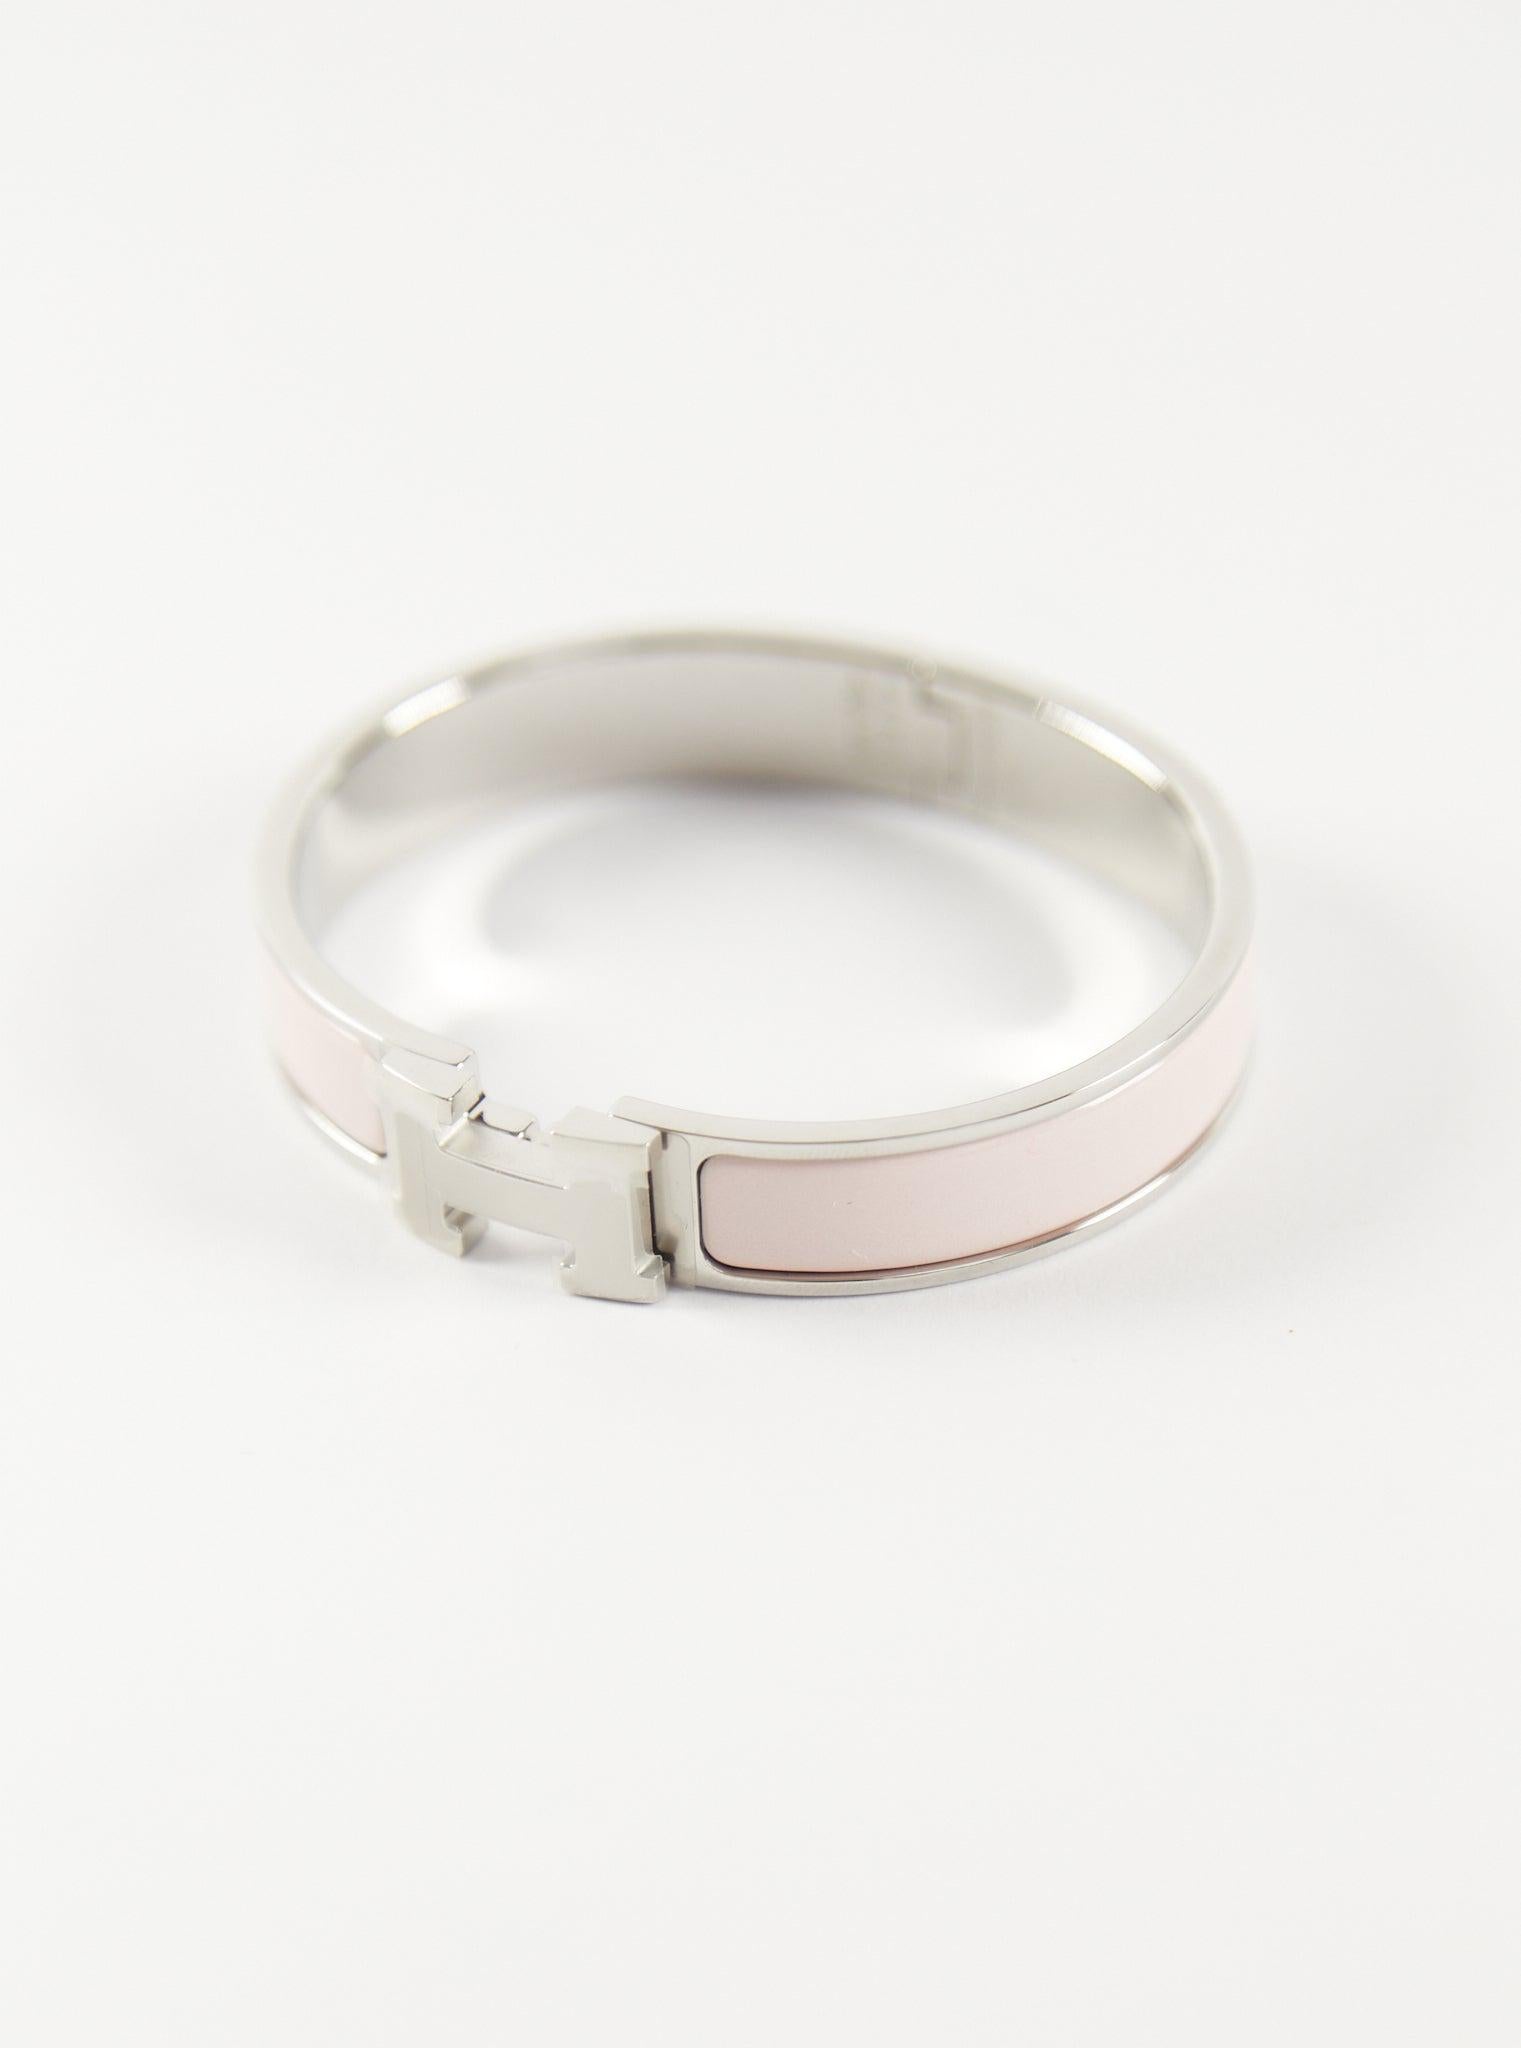 Hermès  Clic H GM Bracelet in Rose Candeur & Palladium

Wrist size: 16.8 cm  Width: 8 mm

Made in France